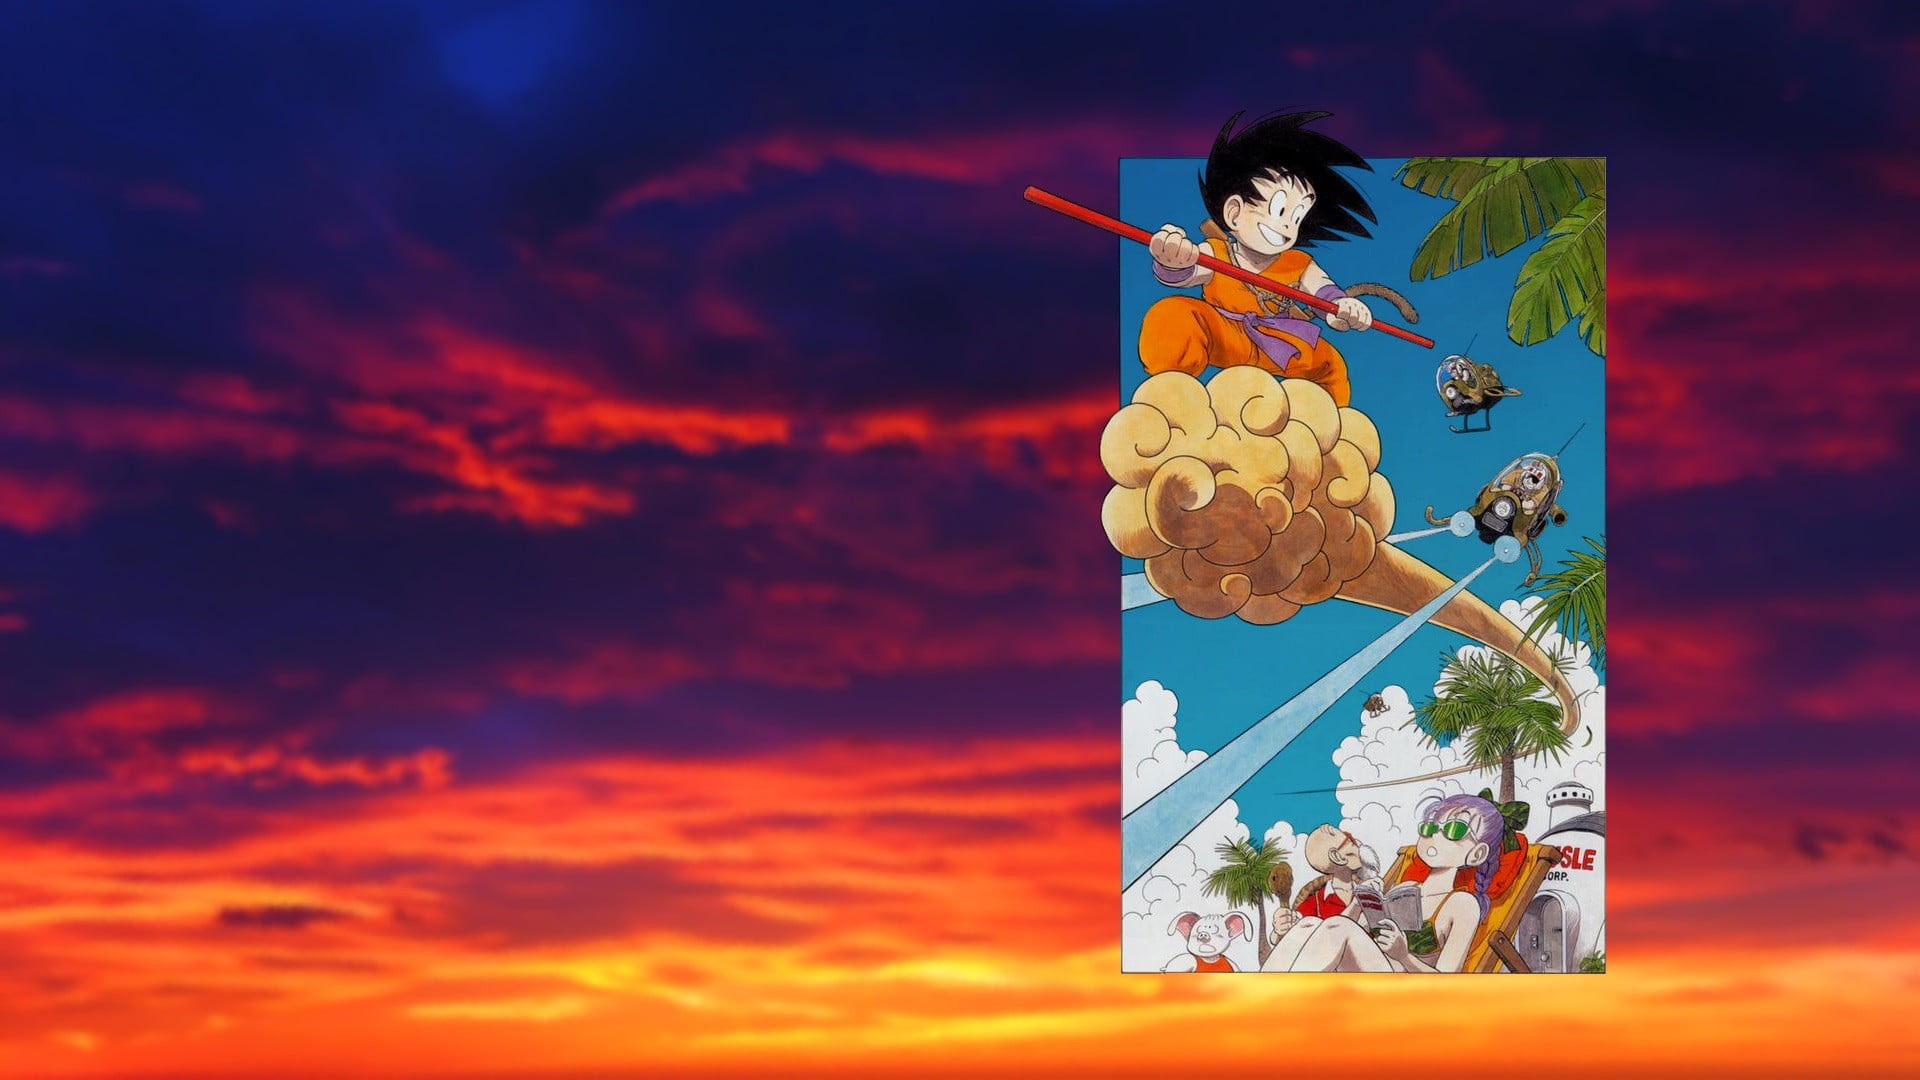 Free Download | Hd Wallpaper: Dragon Ball Z, Son Goku, Cloud - Sky